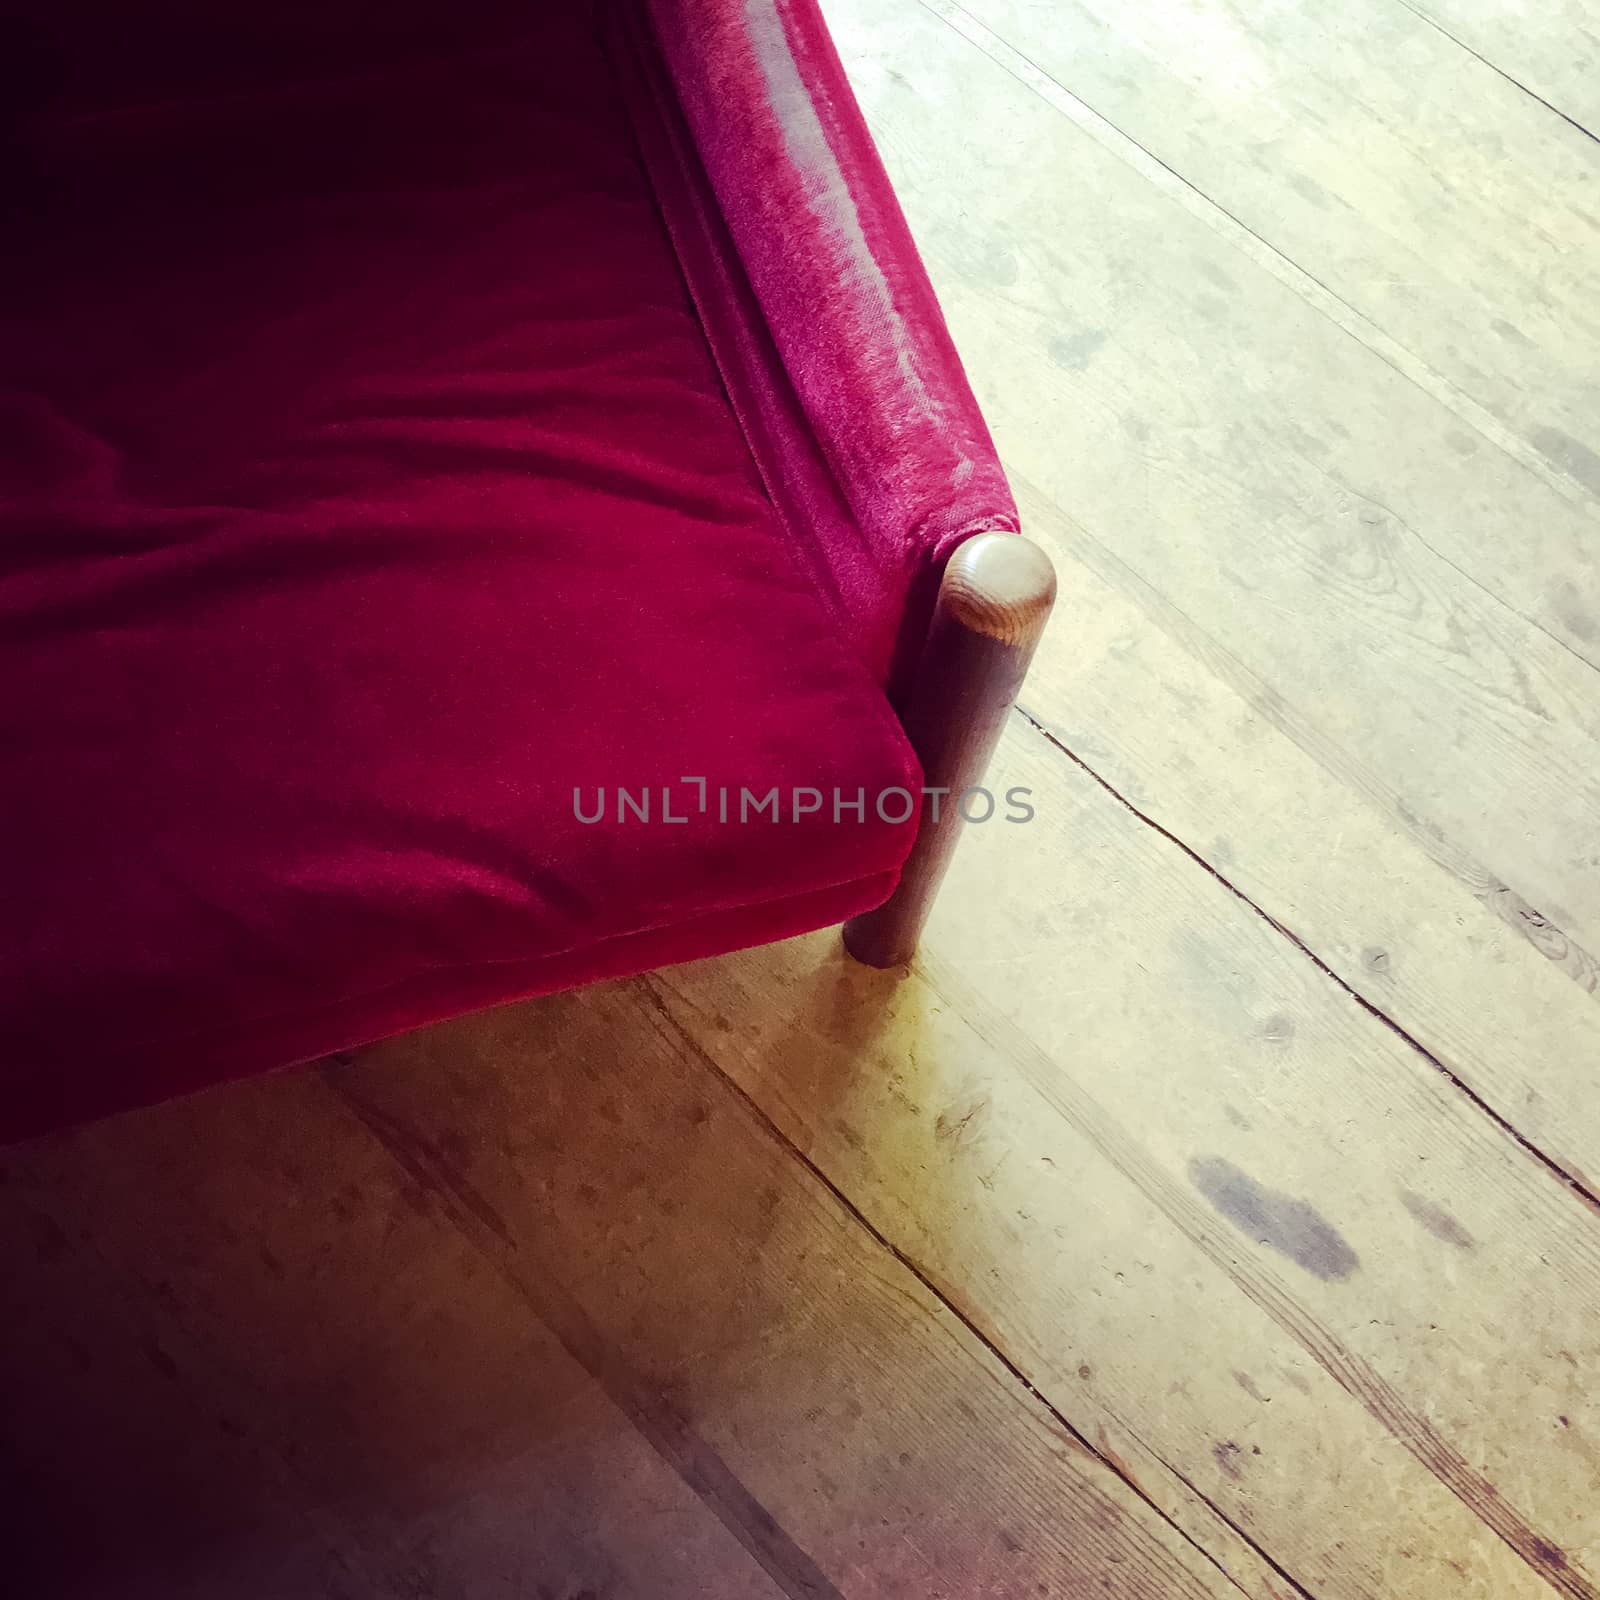 Vintage red velvet armchair on wooden floor. Retry style furniture.